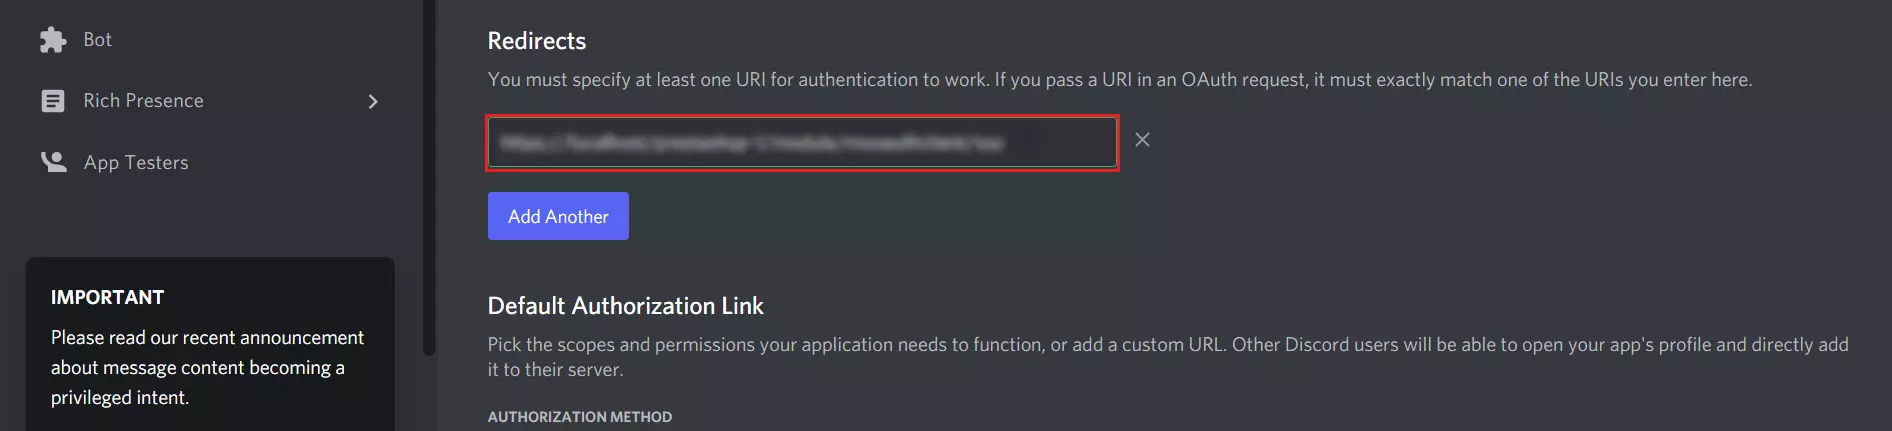 Callback URL | Discord OAuth & OpenID Single Sign-On (SSO)